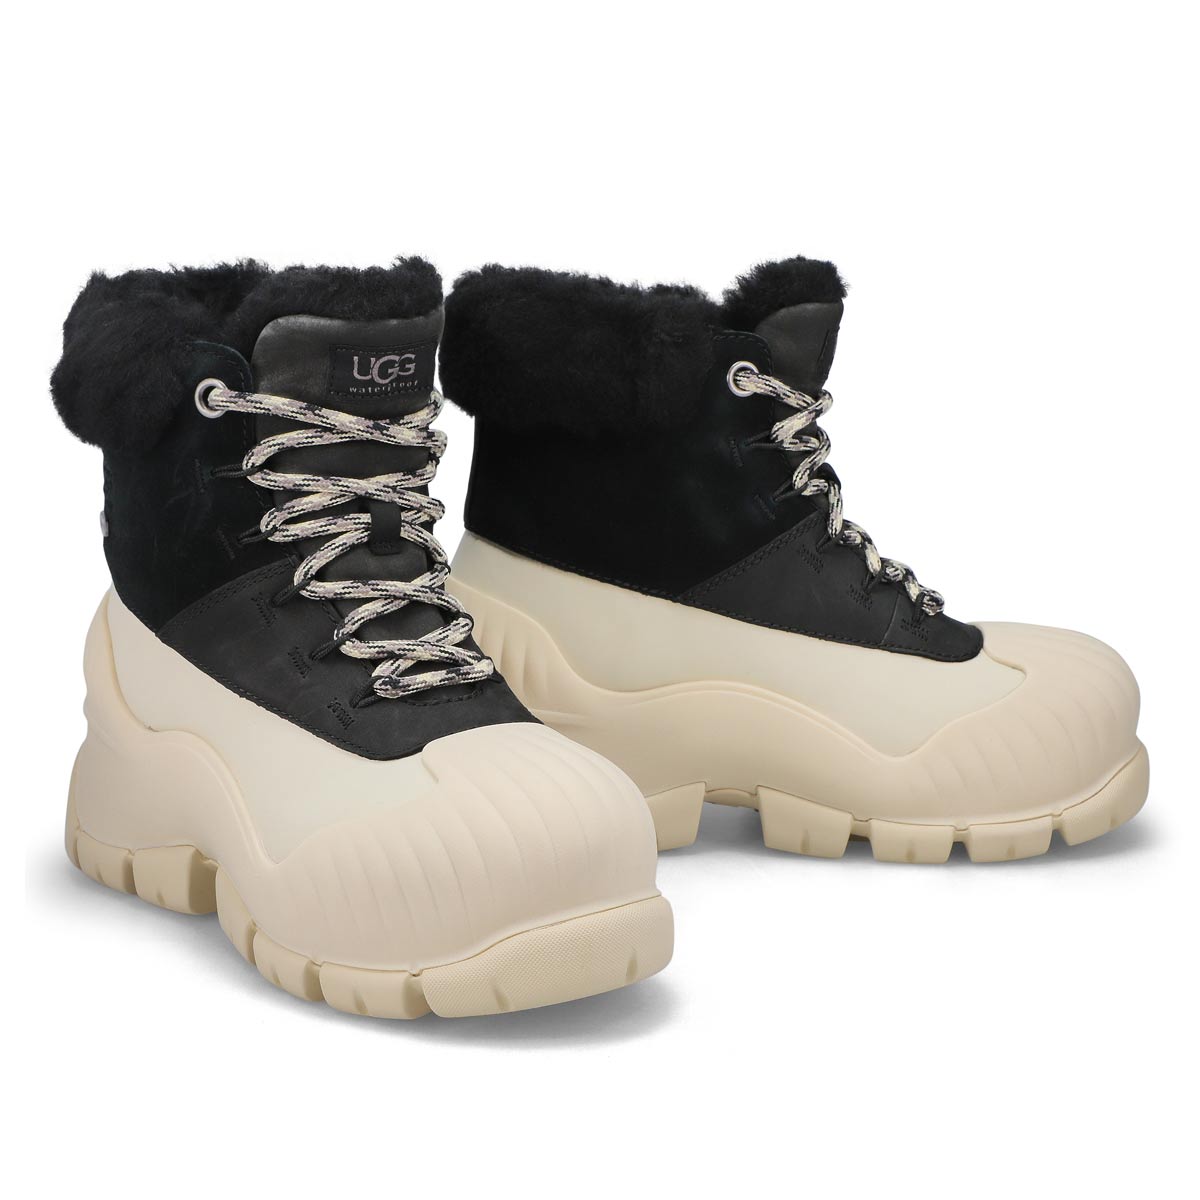 UGG Women's Adiroam Hiker Winter Boot -Fossil | SoftMoc.com